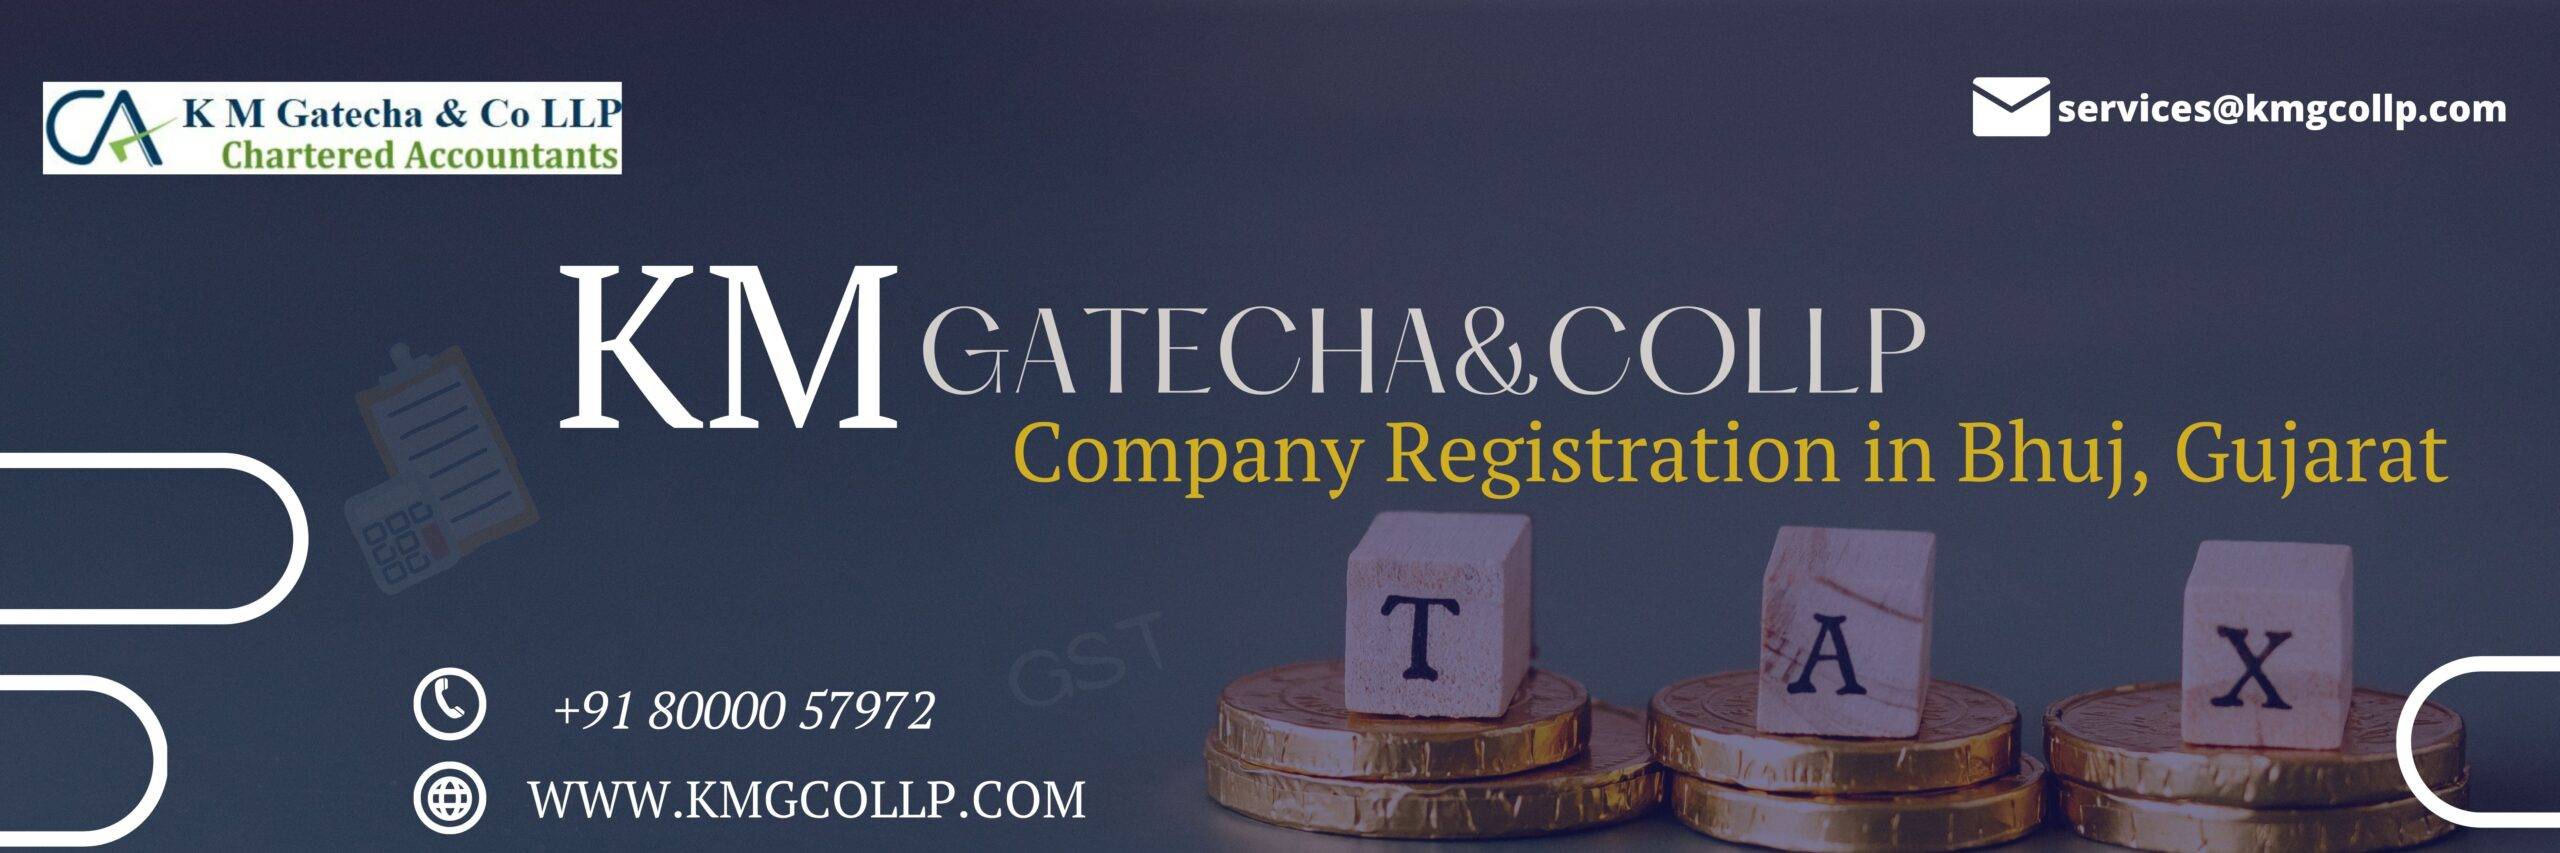 Company Registration in Bhuj